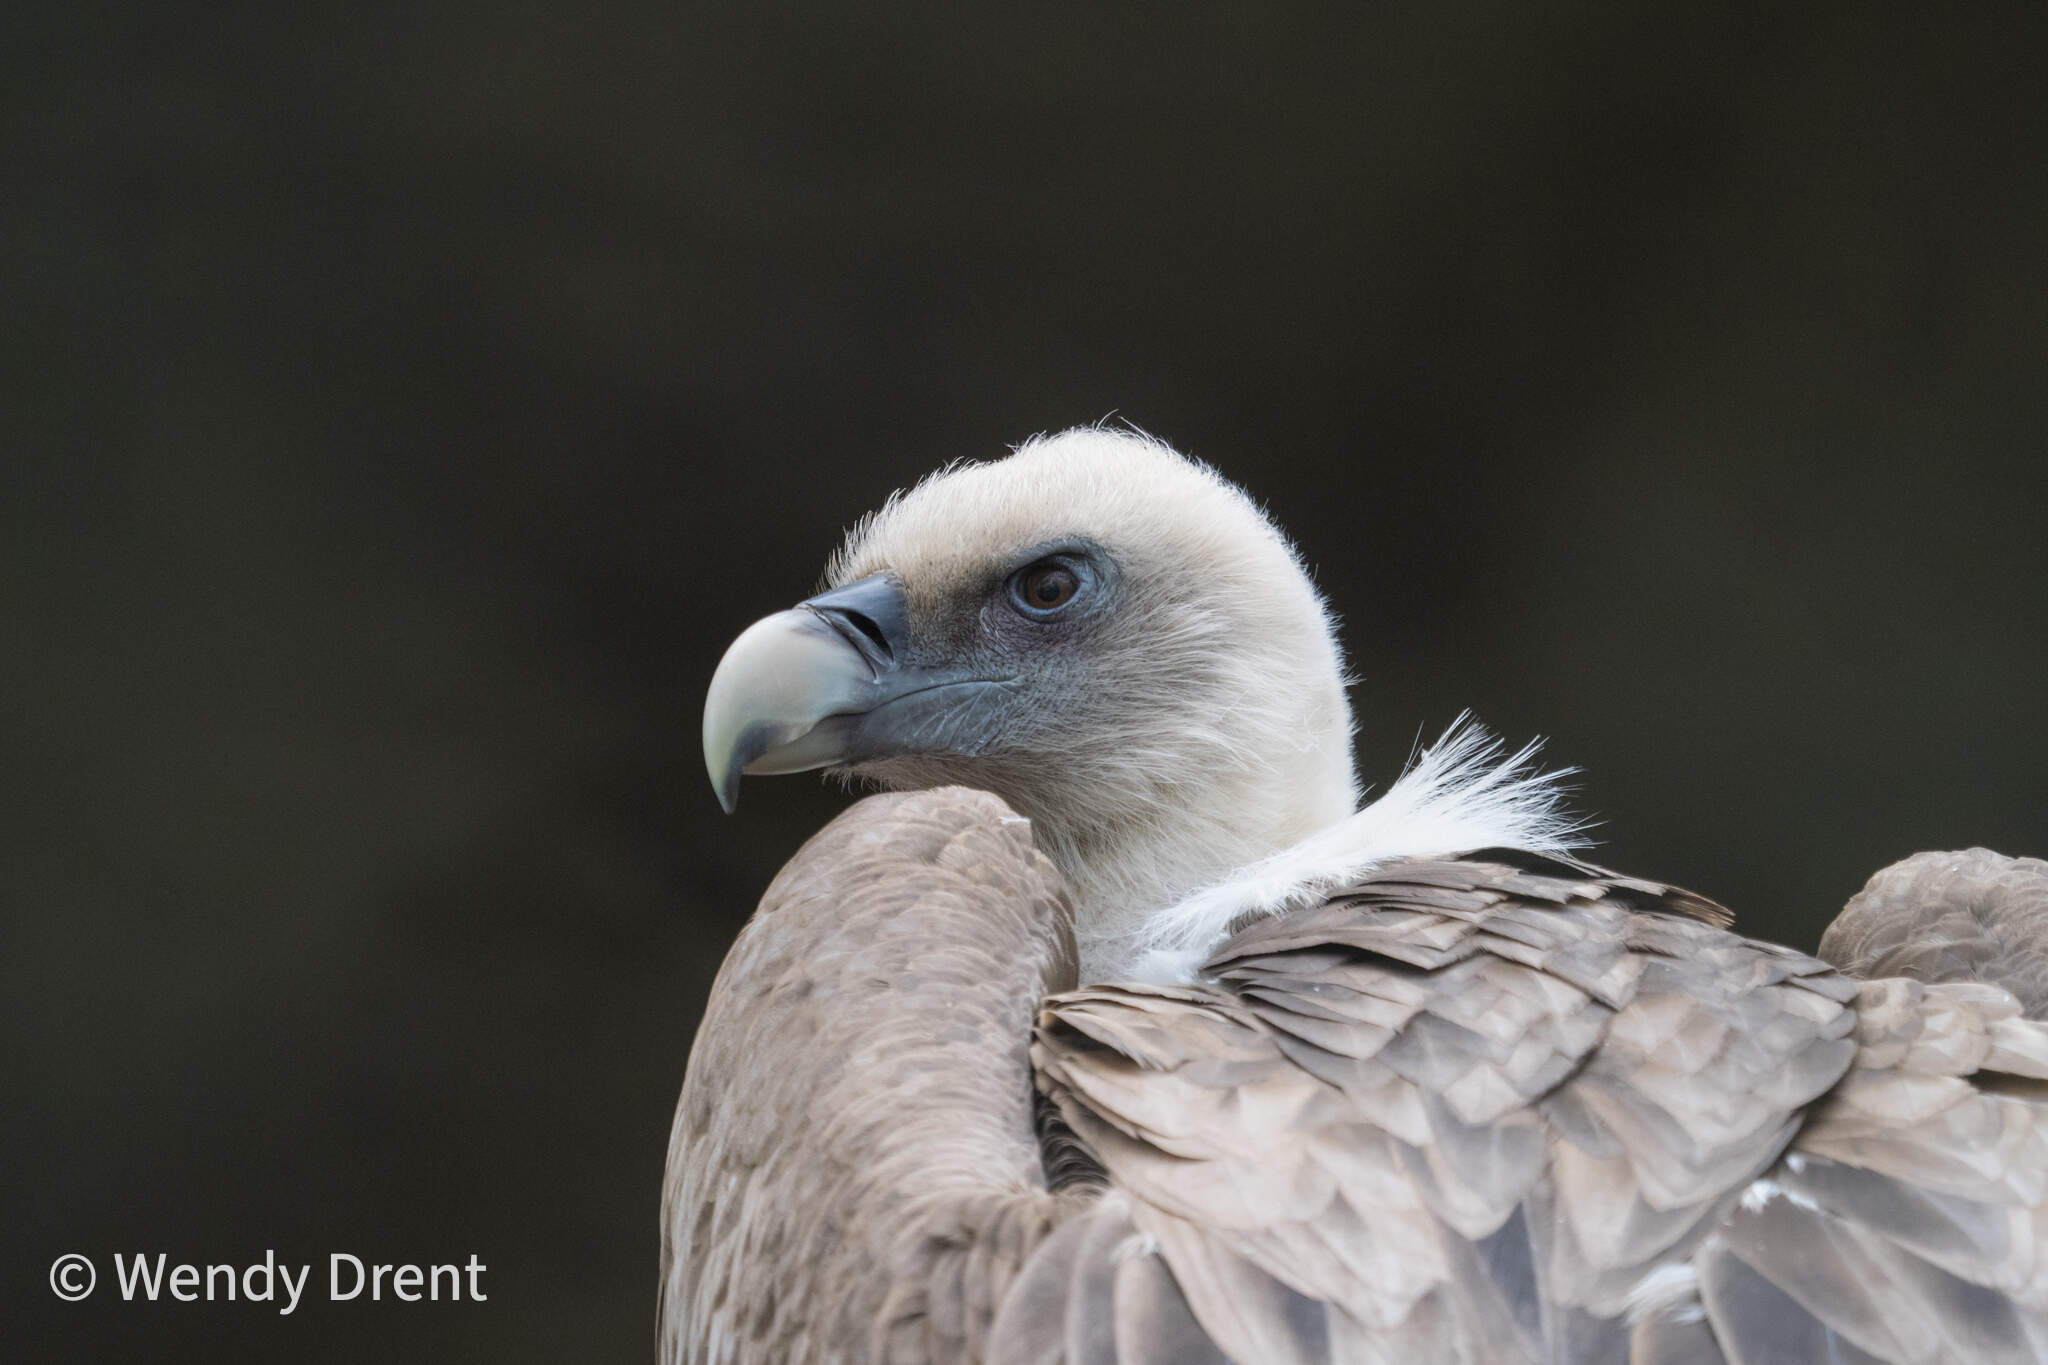 griffon vulture, vale gier, wendy drent, birds, wendydrent.com